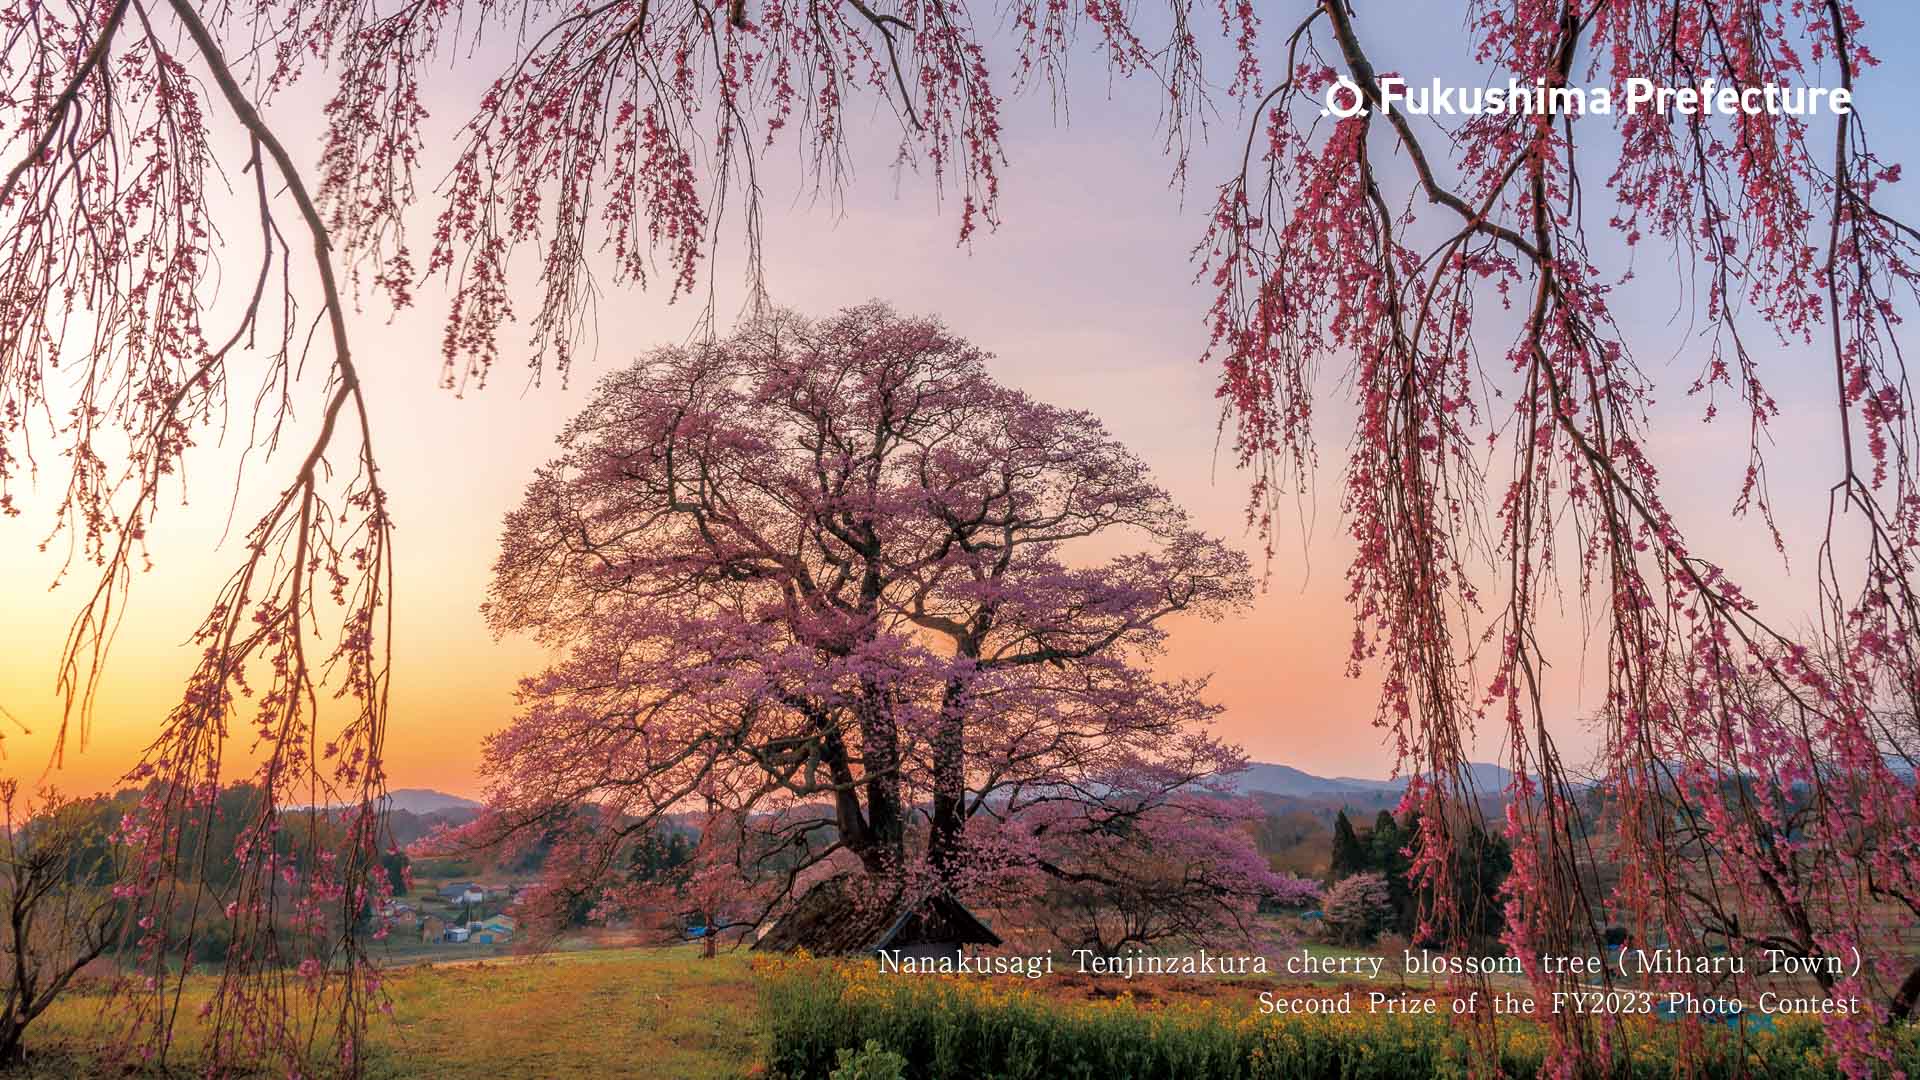 Nanakusagi Tenjinzakura cherry blossom tree （Miharu Town）Second Prize of the FY2023 Photo Contest